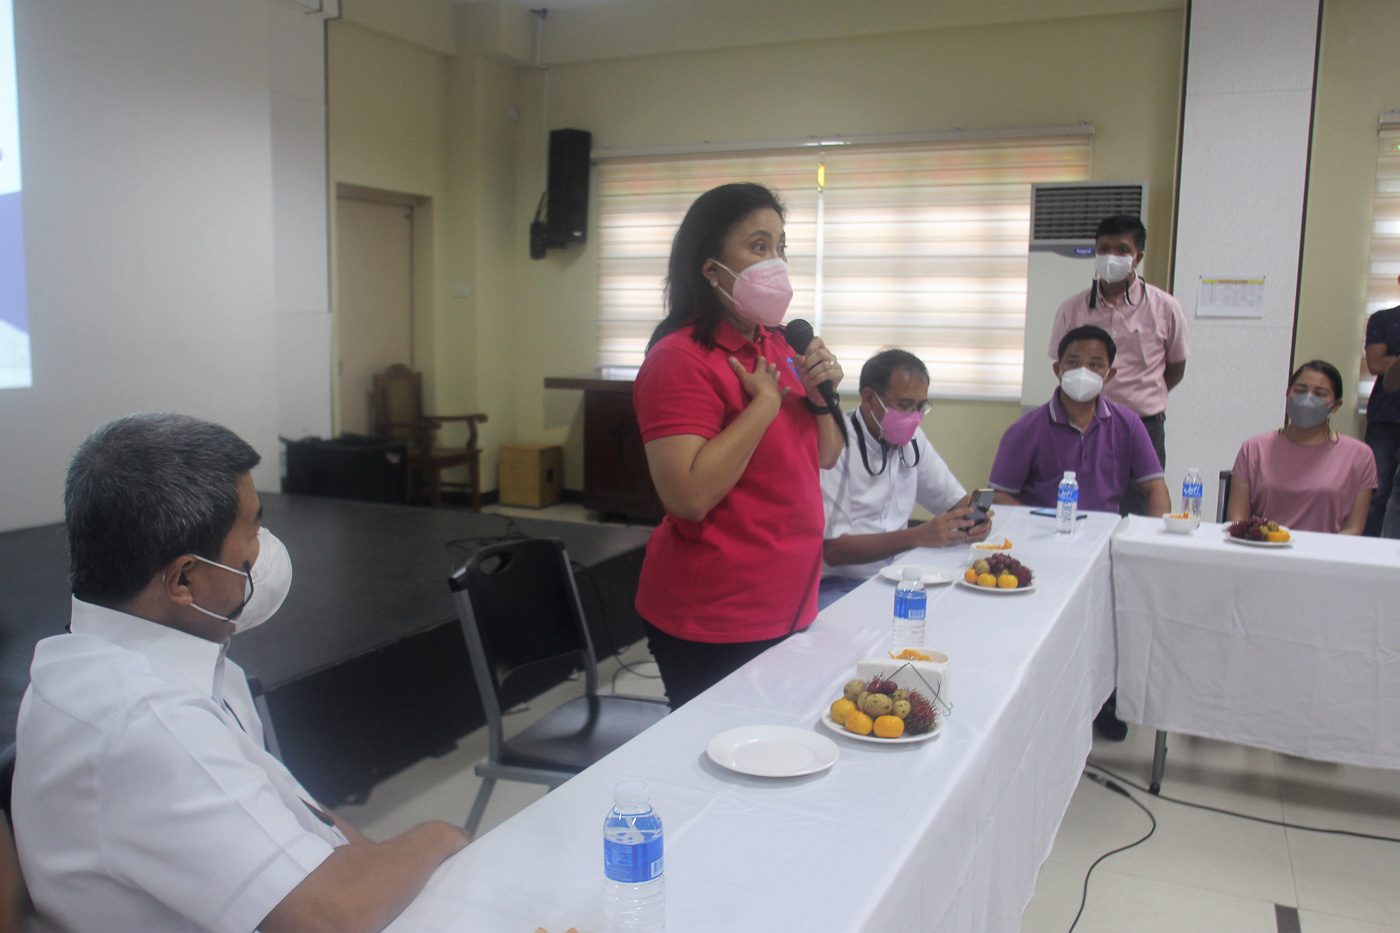 In Legazpi, Robredo asks Church’s help to fight fake news